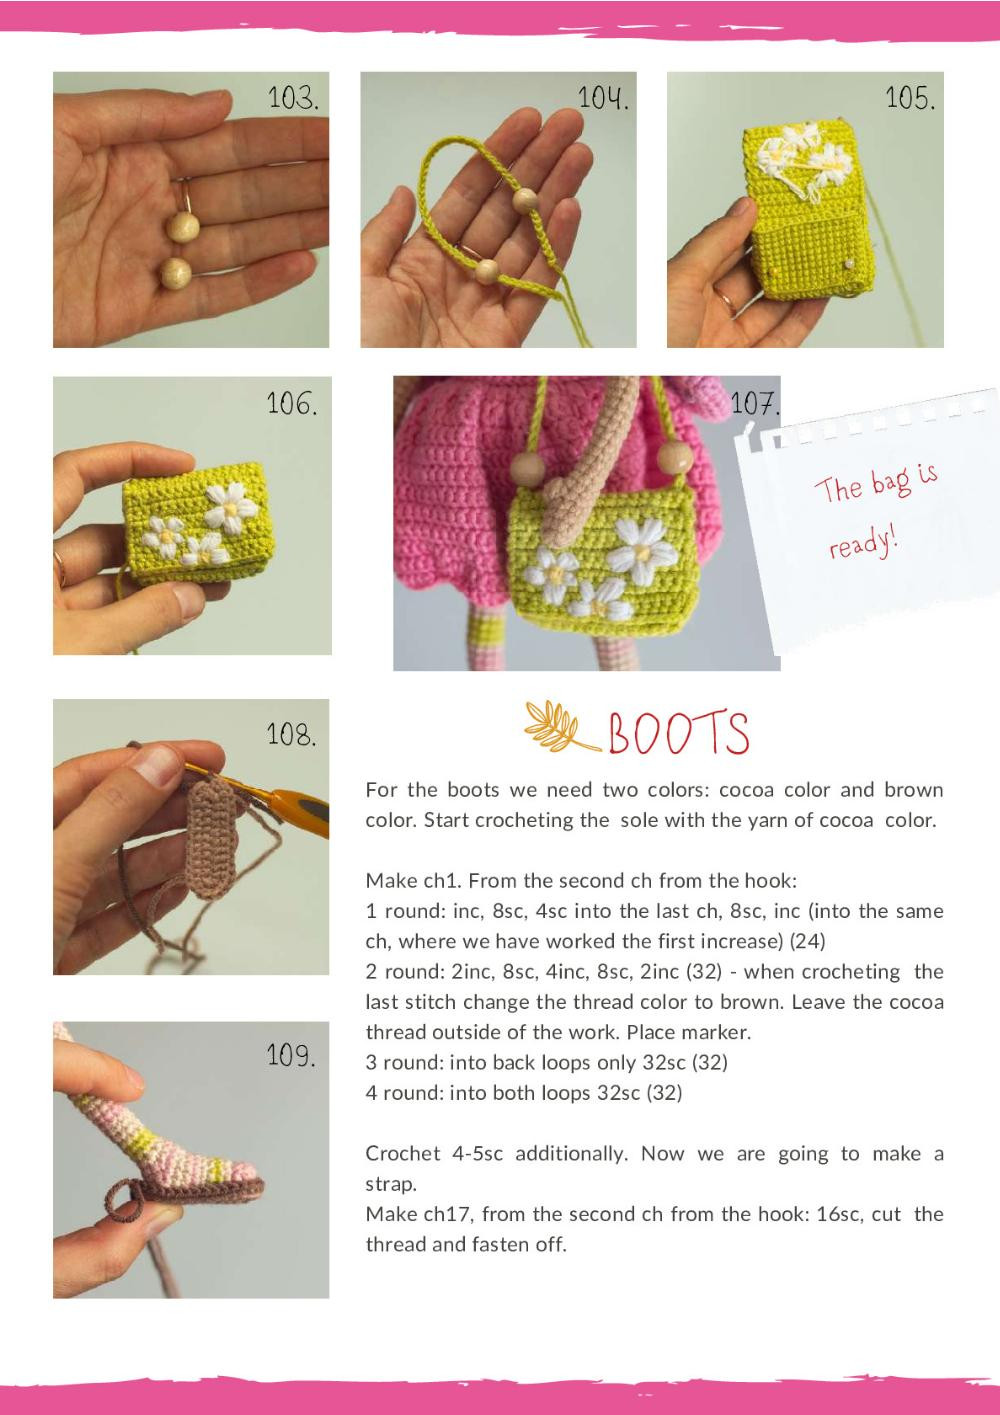 ROSY, THE FLOWER FAIRY Crochet toy pattern